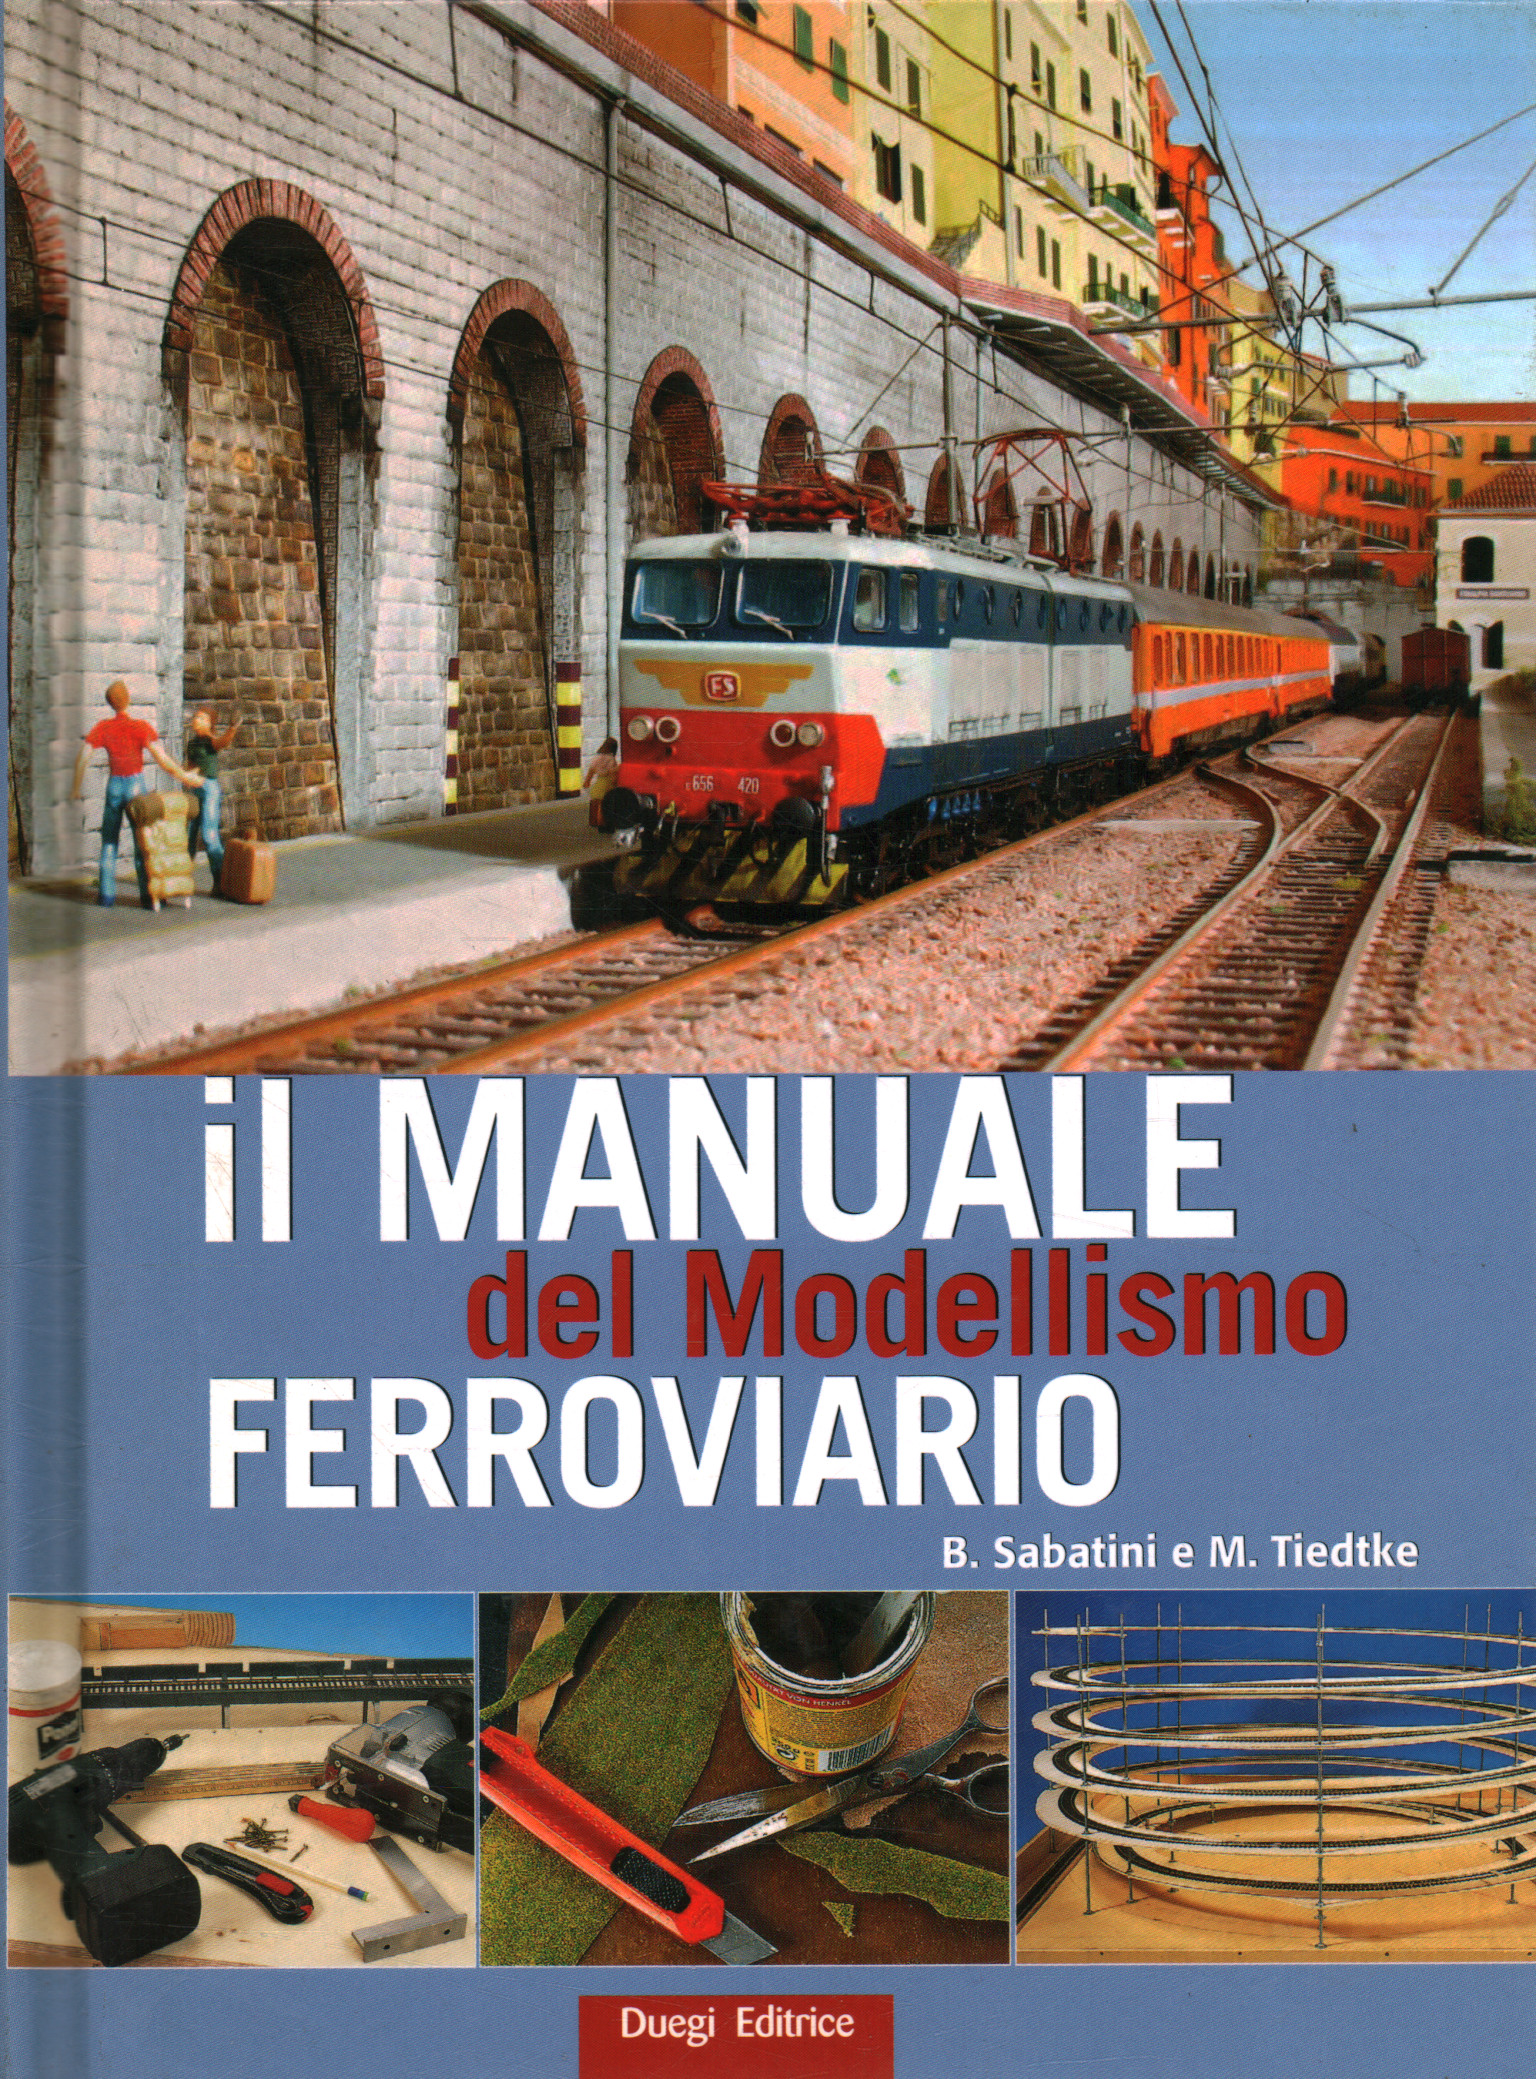 The model railway handbook